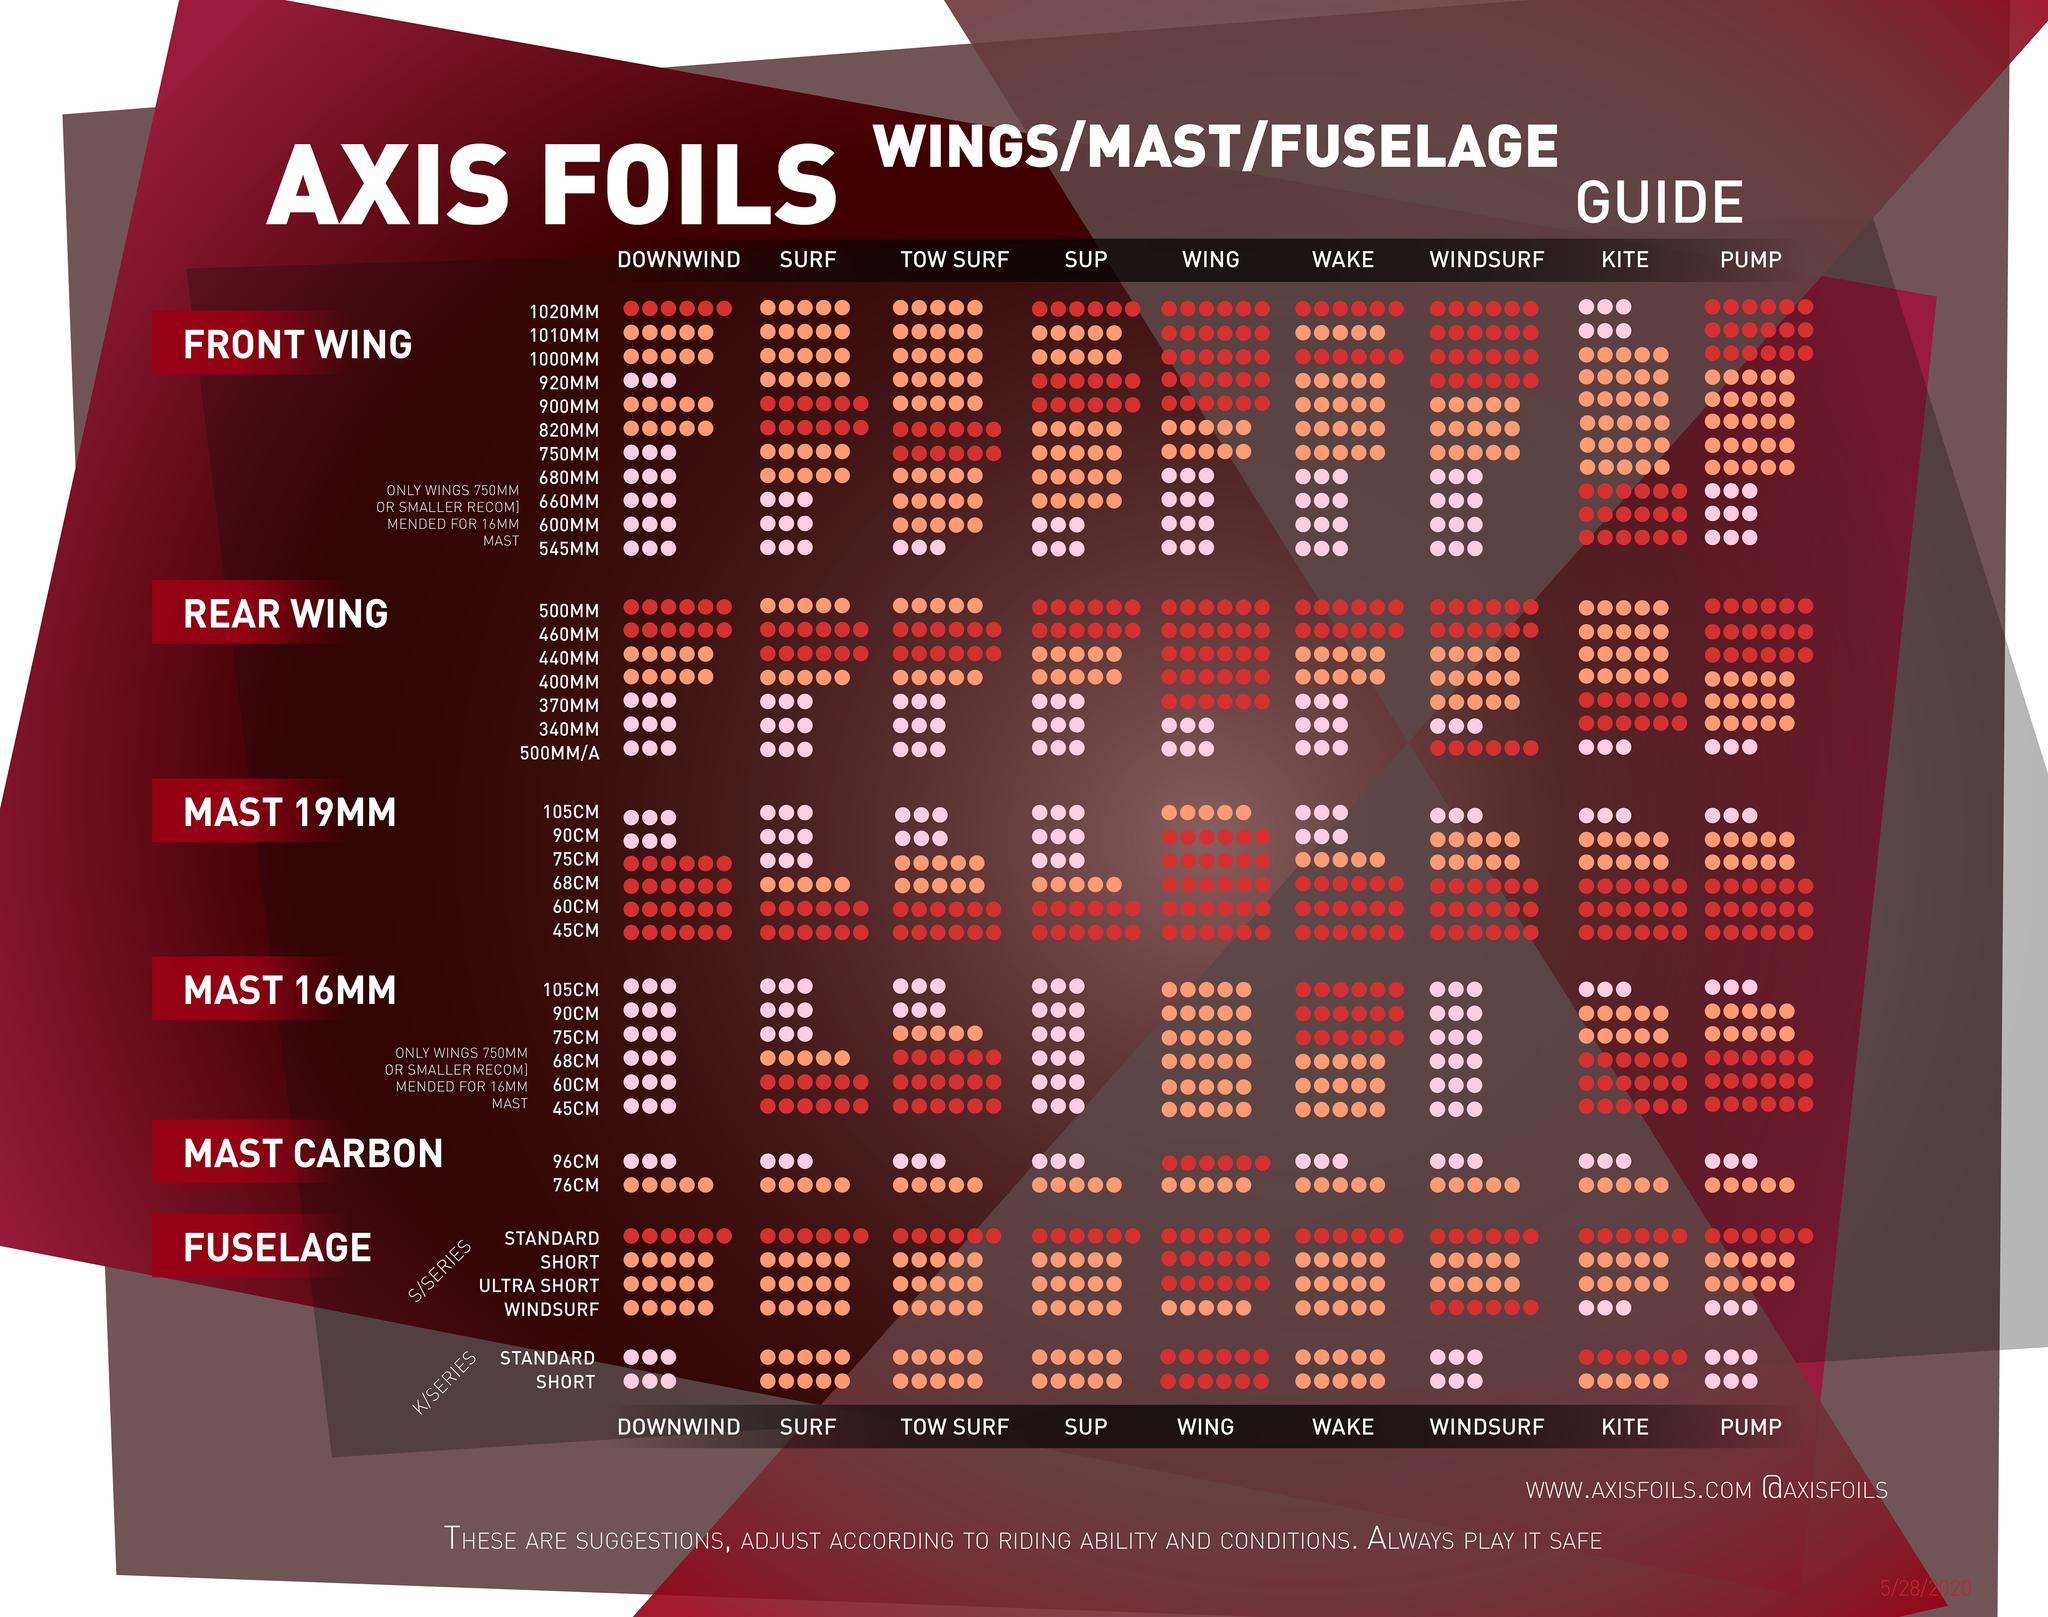 AXIS Foils Gear Guide